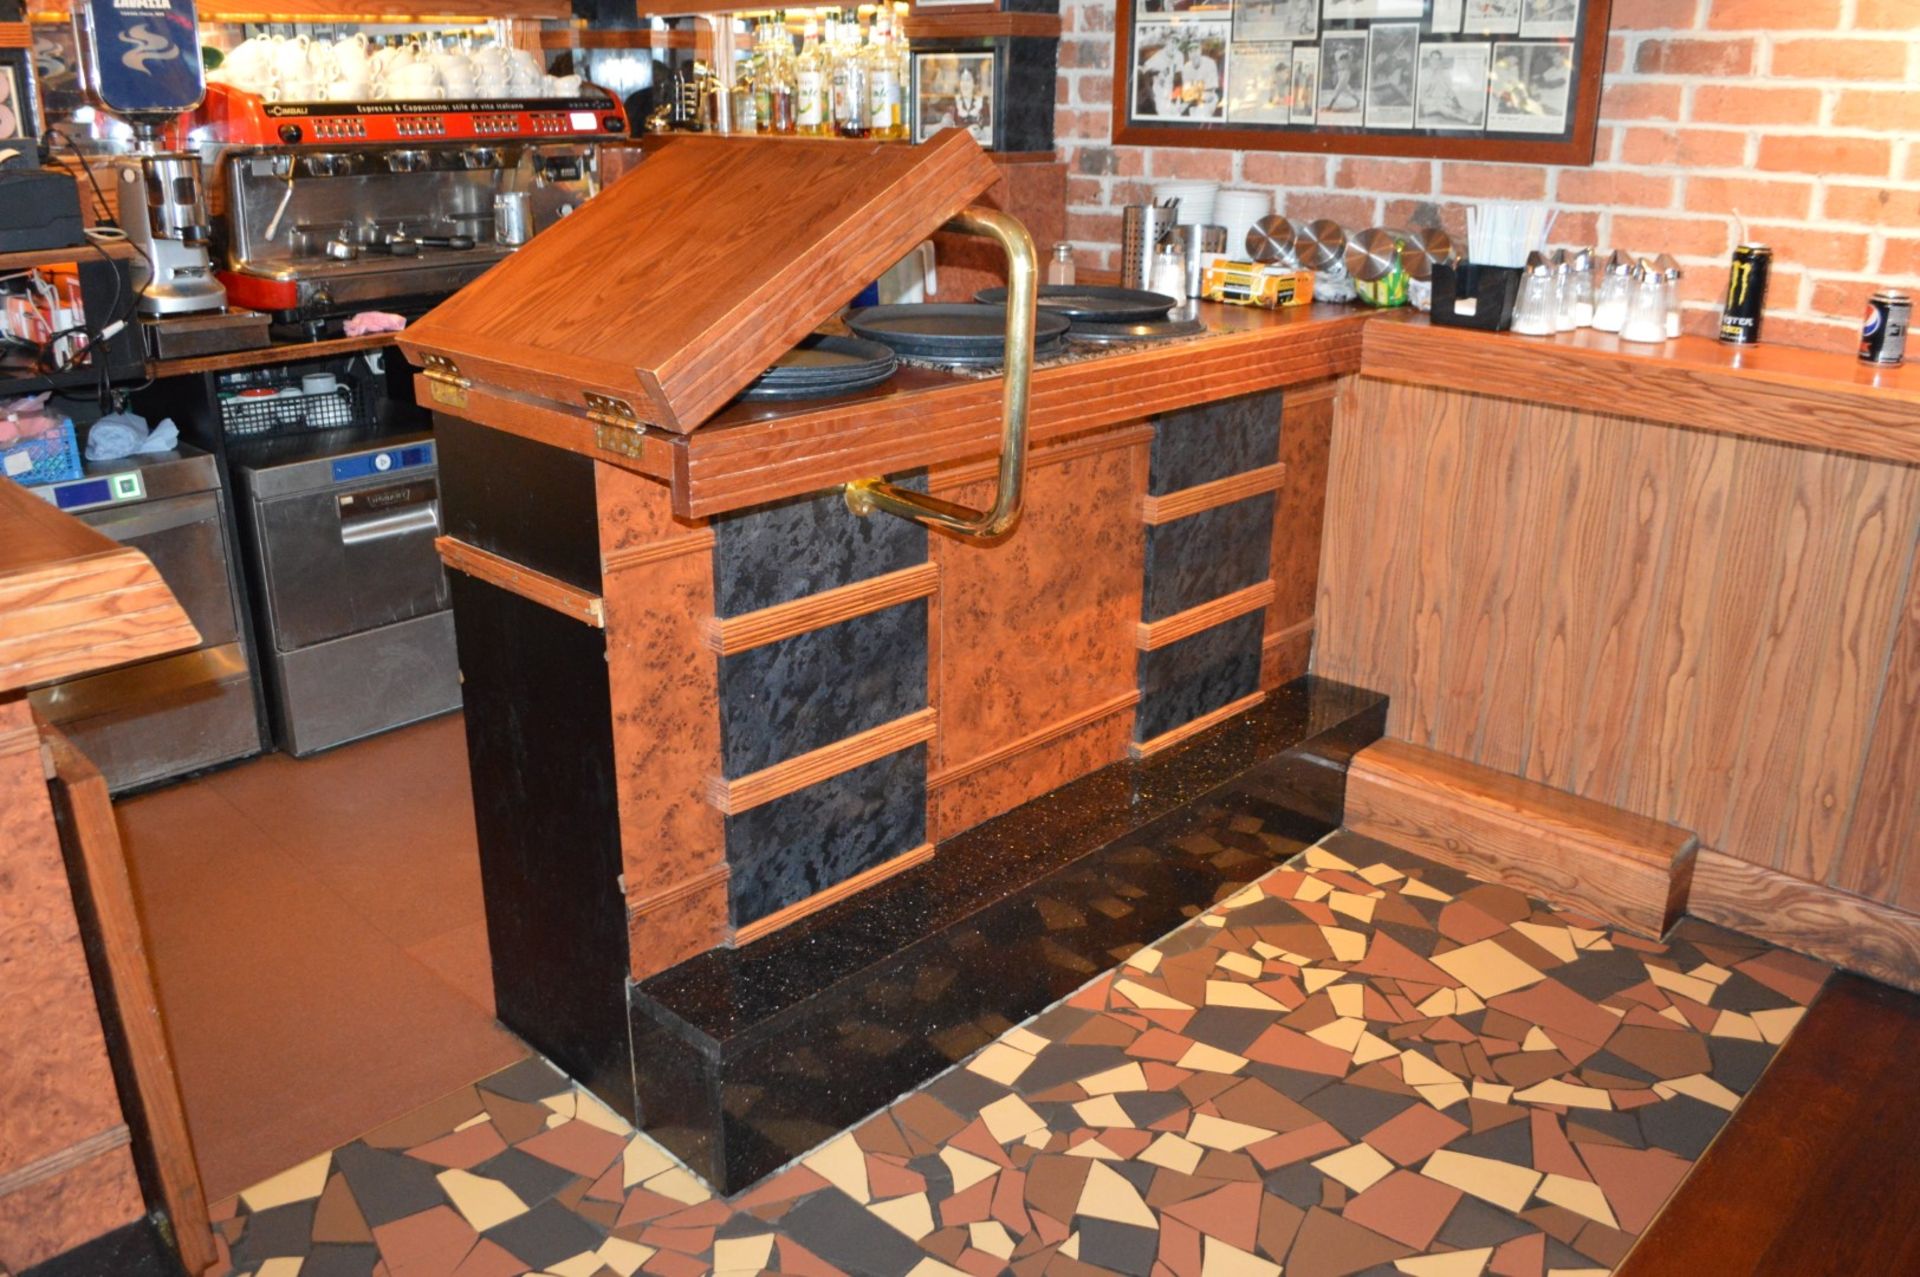 1 x Restaurant / Pub Bar and Backbar From American Diner Themed Restaurant - Burr Walnut and Black - Image 9 of 47